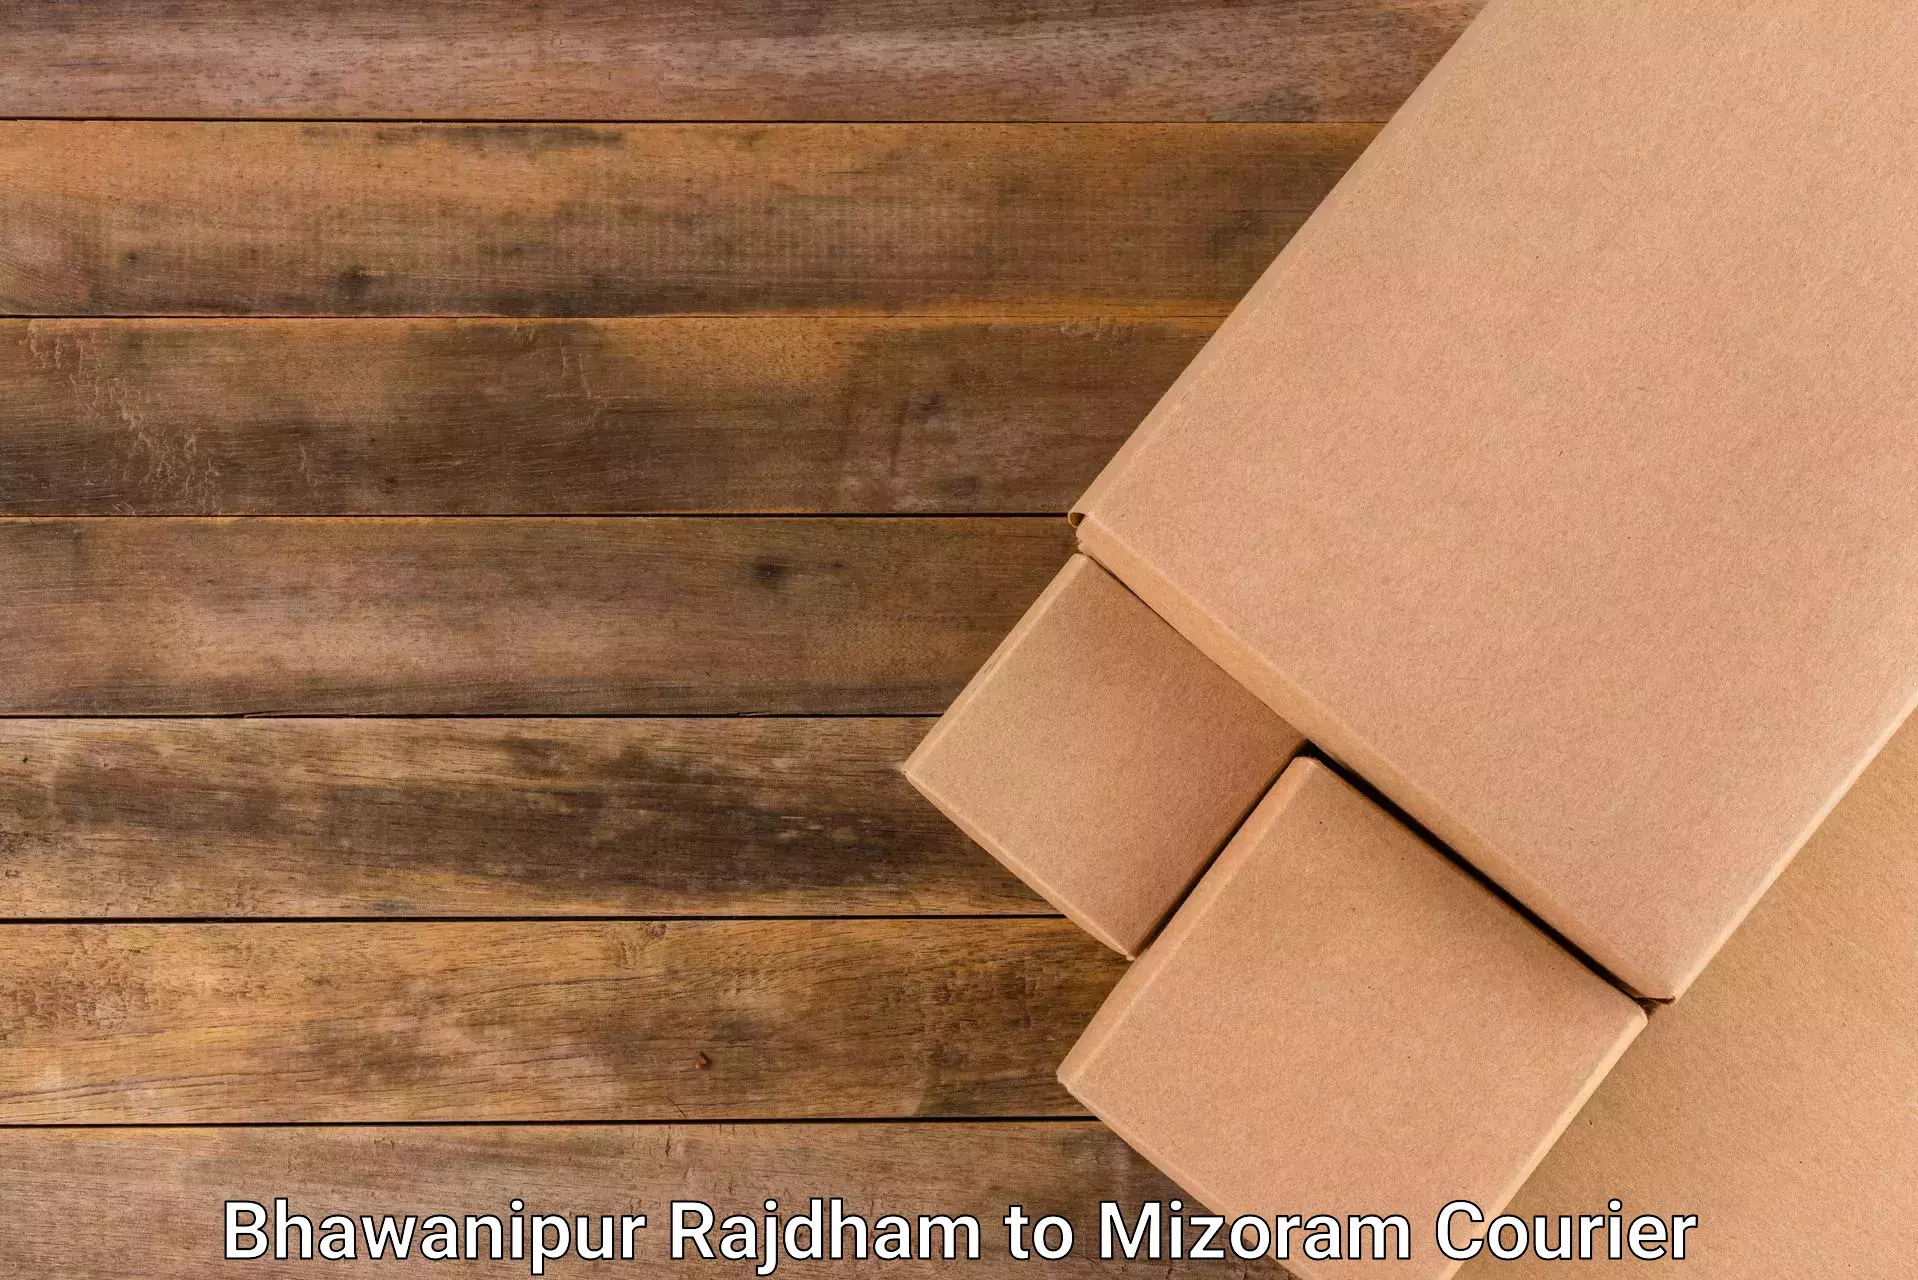 Bulk courier orders Bhawanipur Rajdham to Aizawl